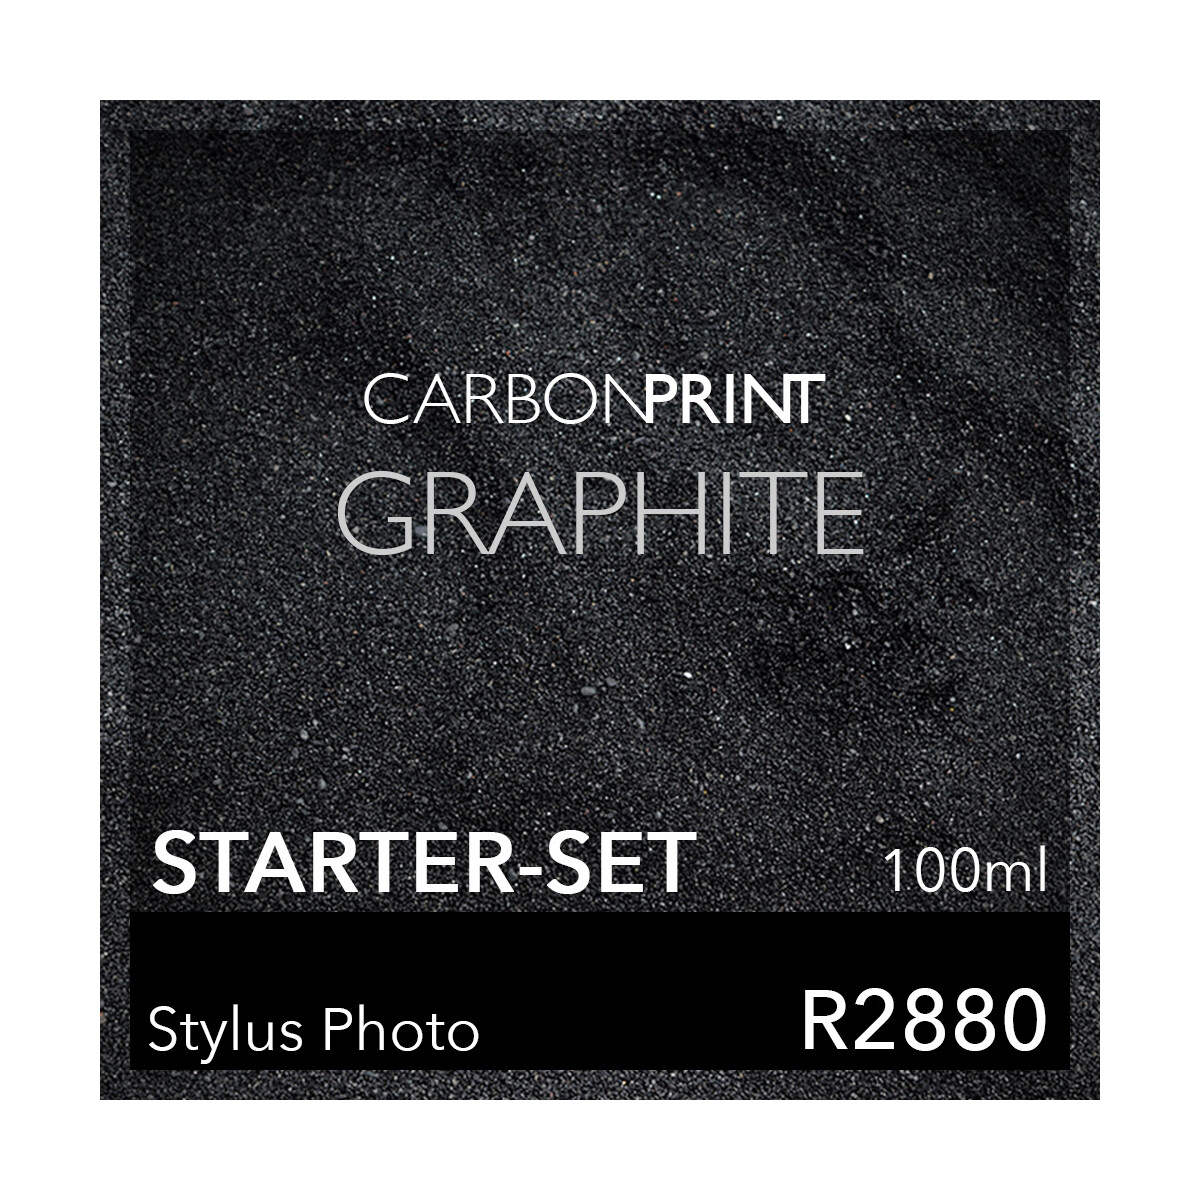 Starter-Set Carbonprint Graphite for Photo R2880 100ml...